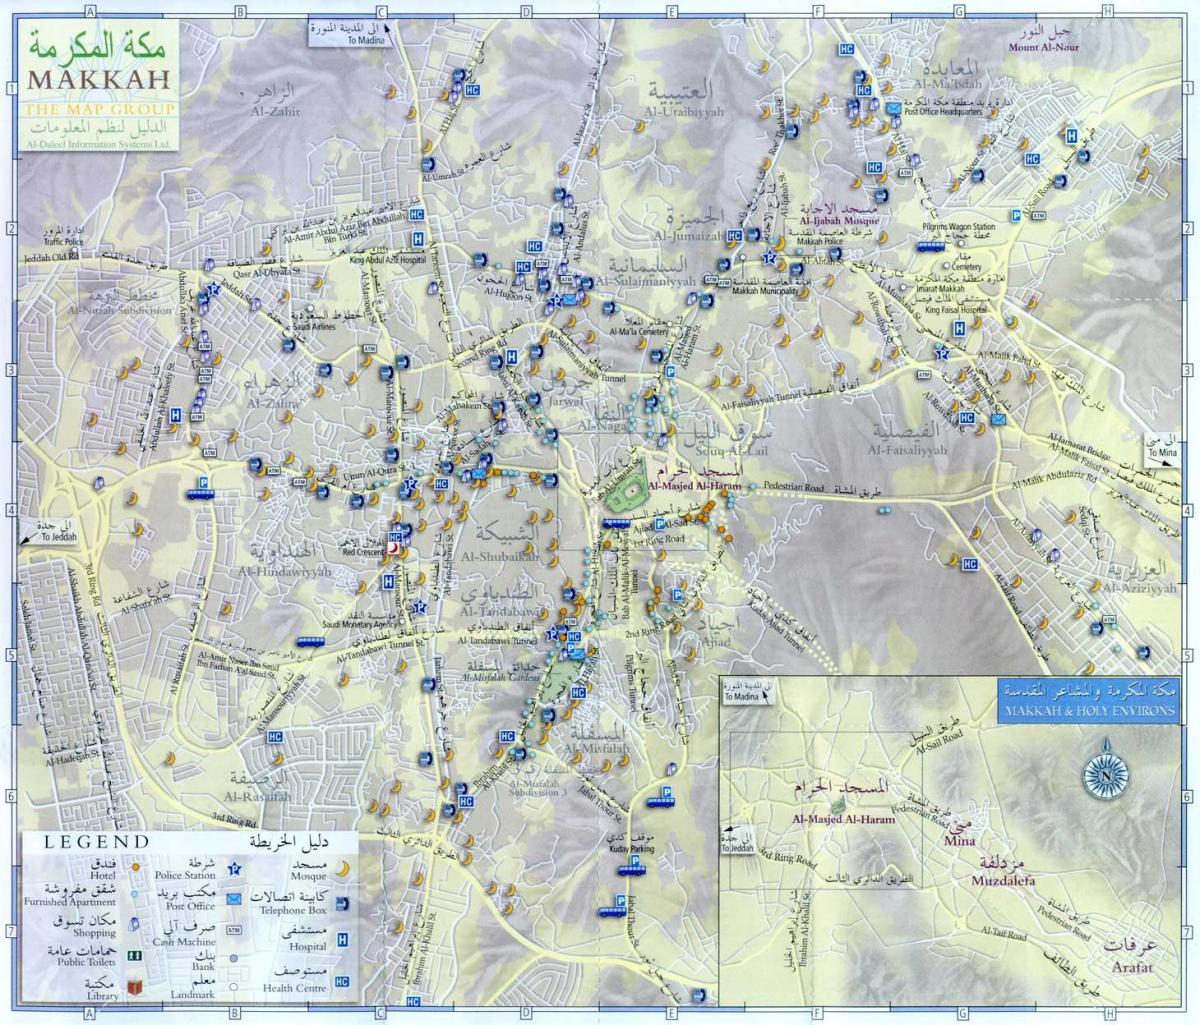  zemljevid Makkah ziyarat mesta